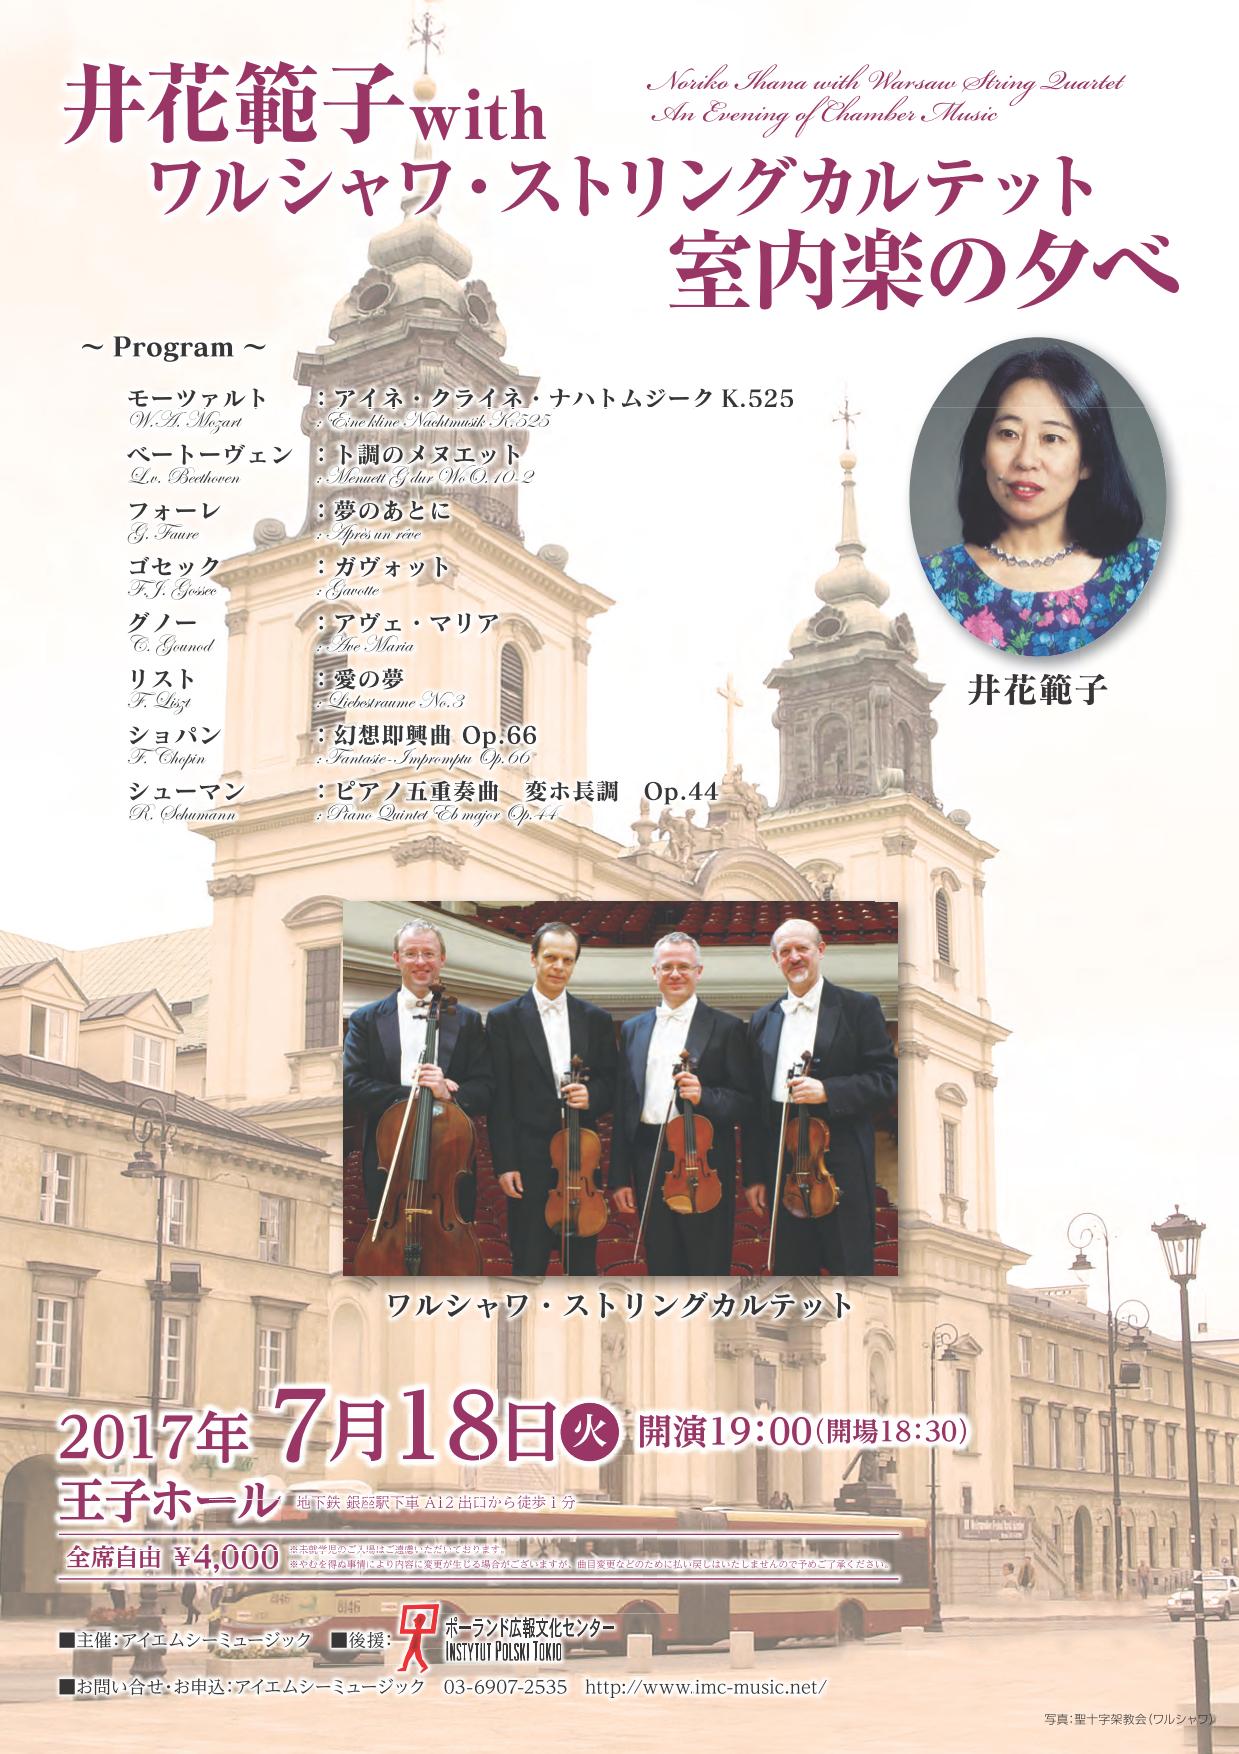 Warsaw String Quartet 2017 0718